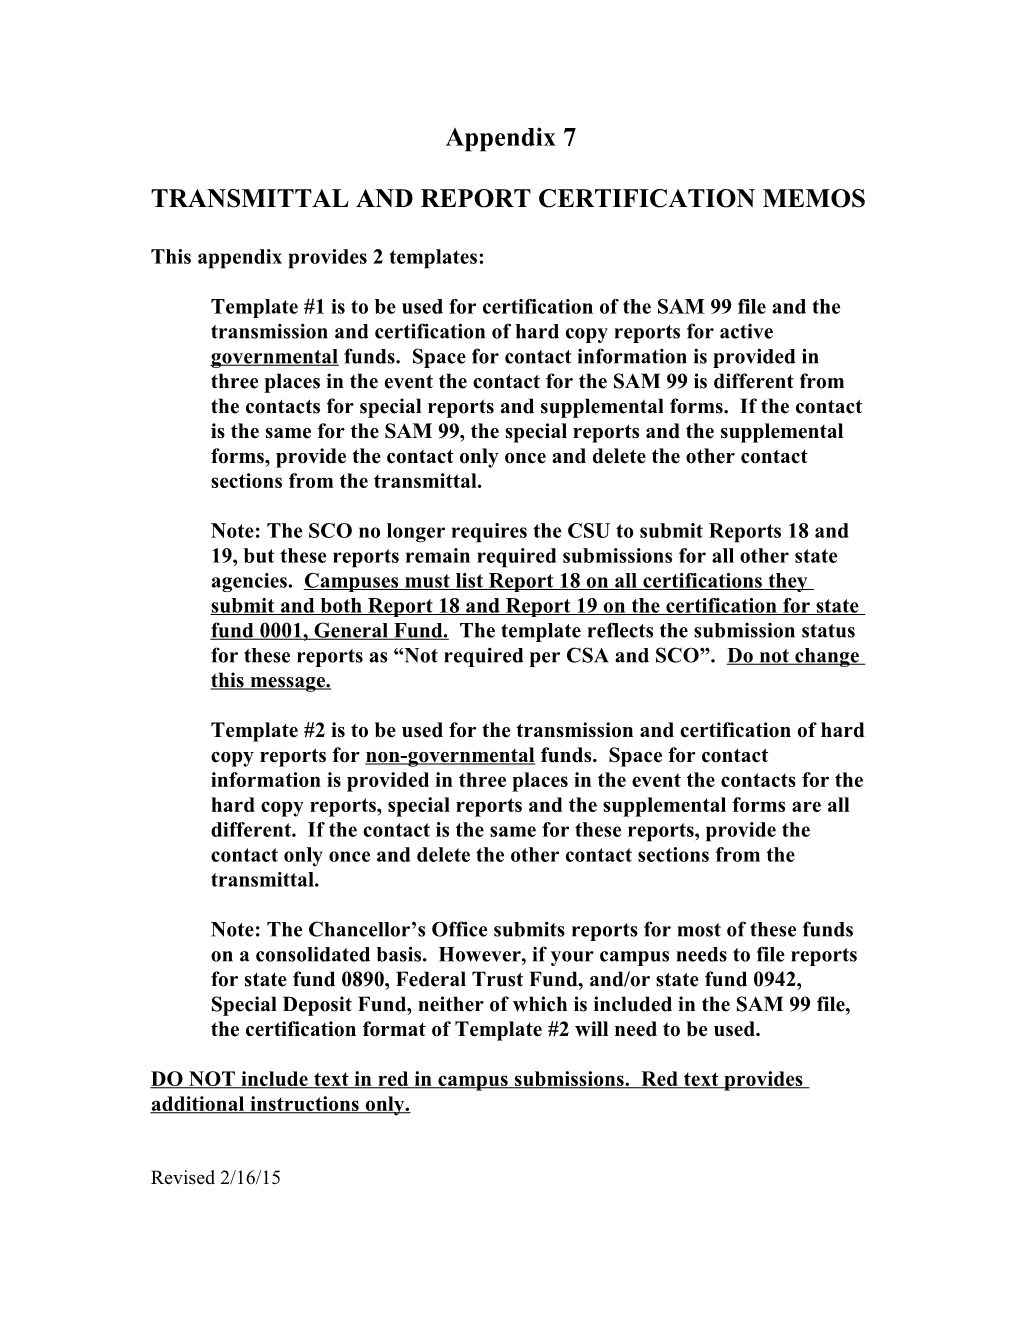 Transmittal and Report Certification Memos